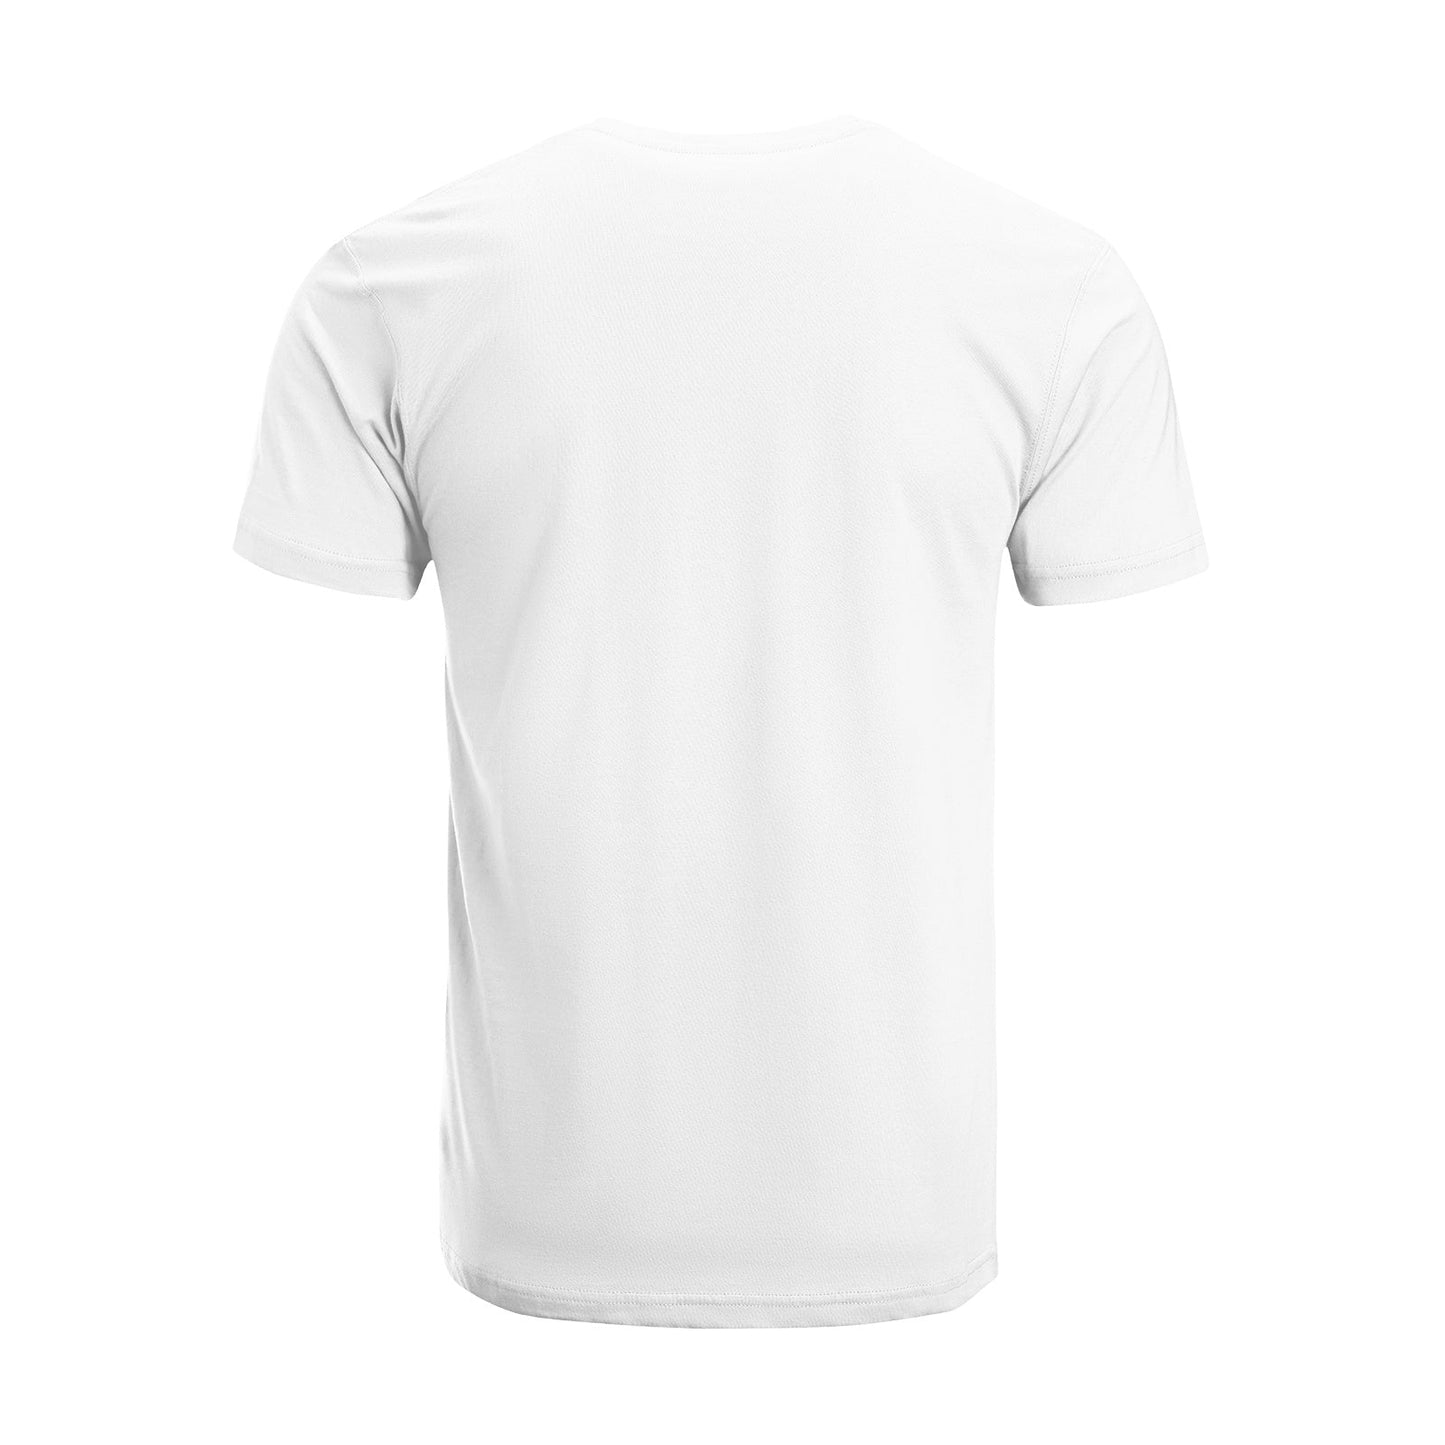 Unisex Short Sleeve Crew Neck Cotton Jersey T-Shirt MOM 01